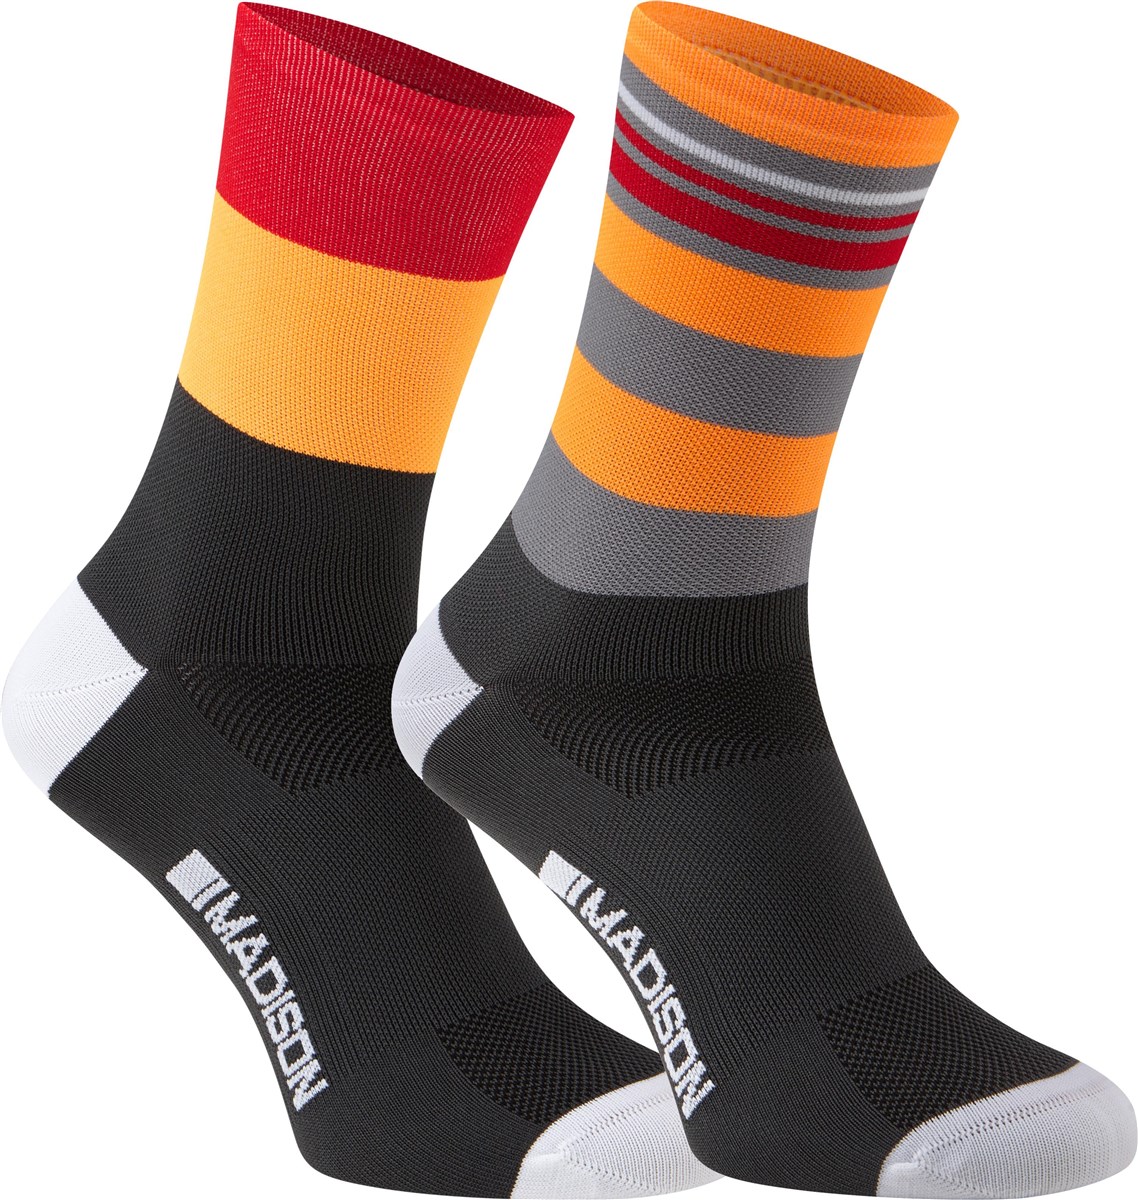 Madison Sportive Long Socks - Pack of 2